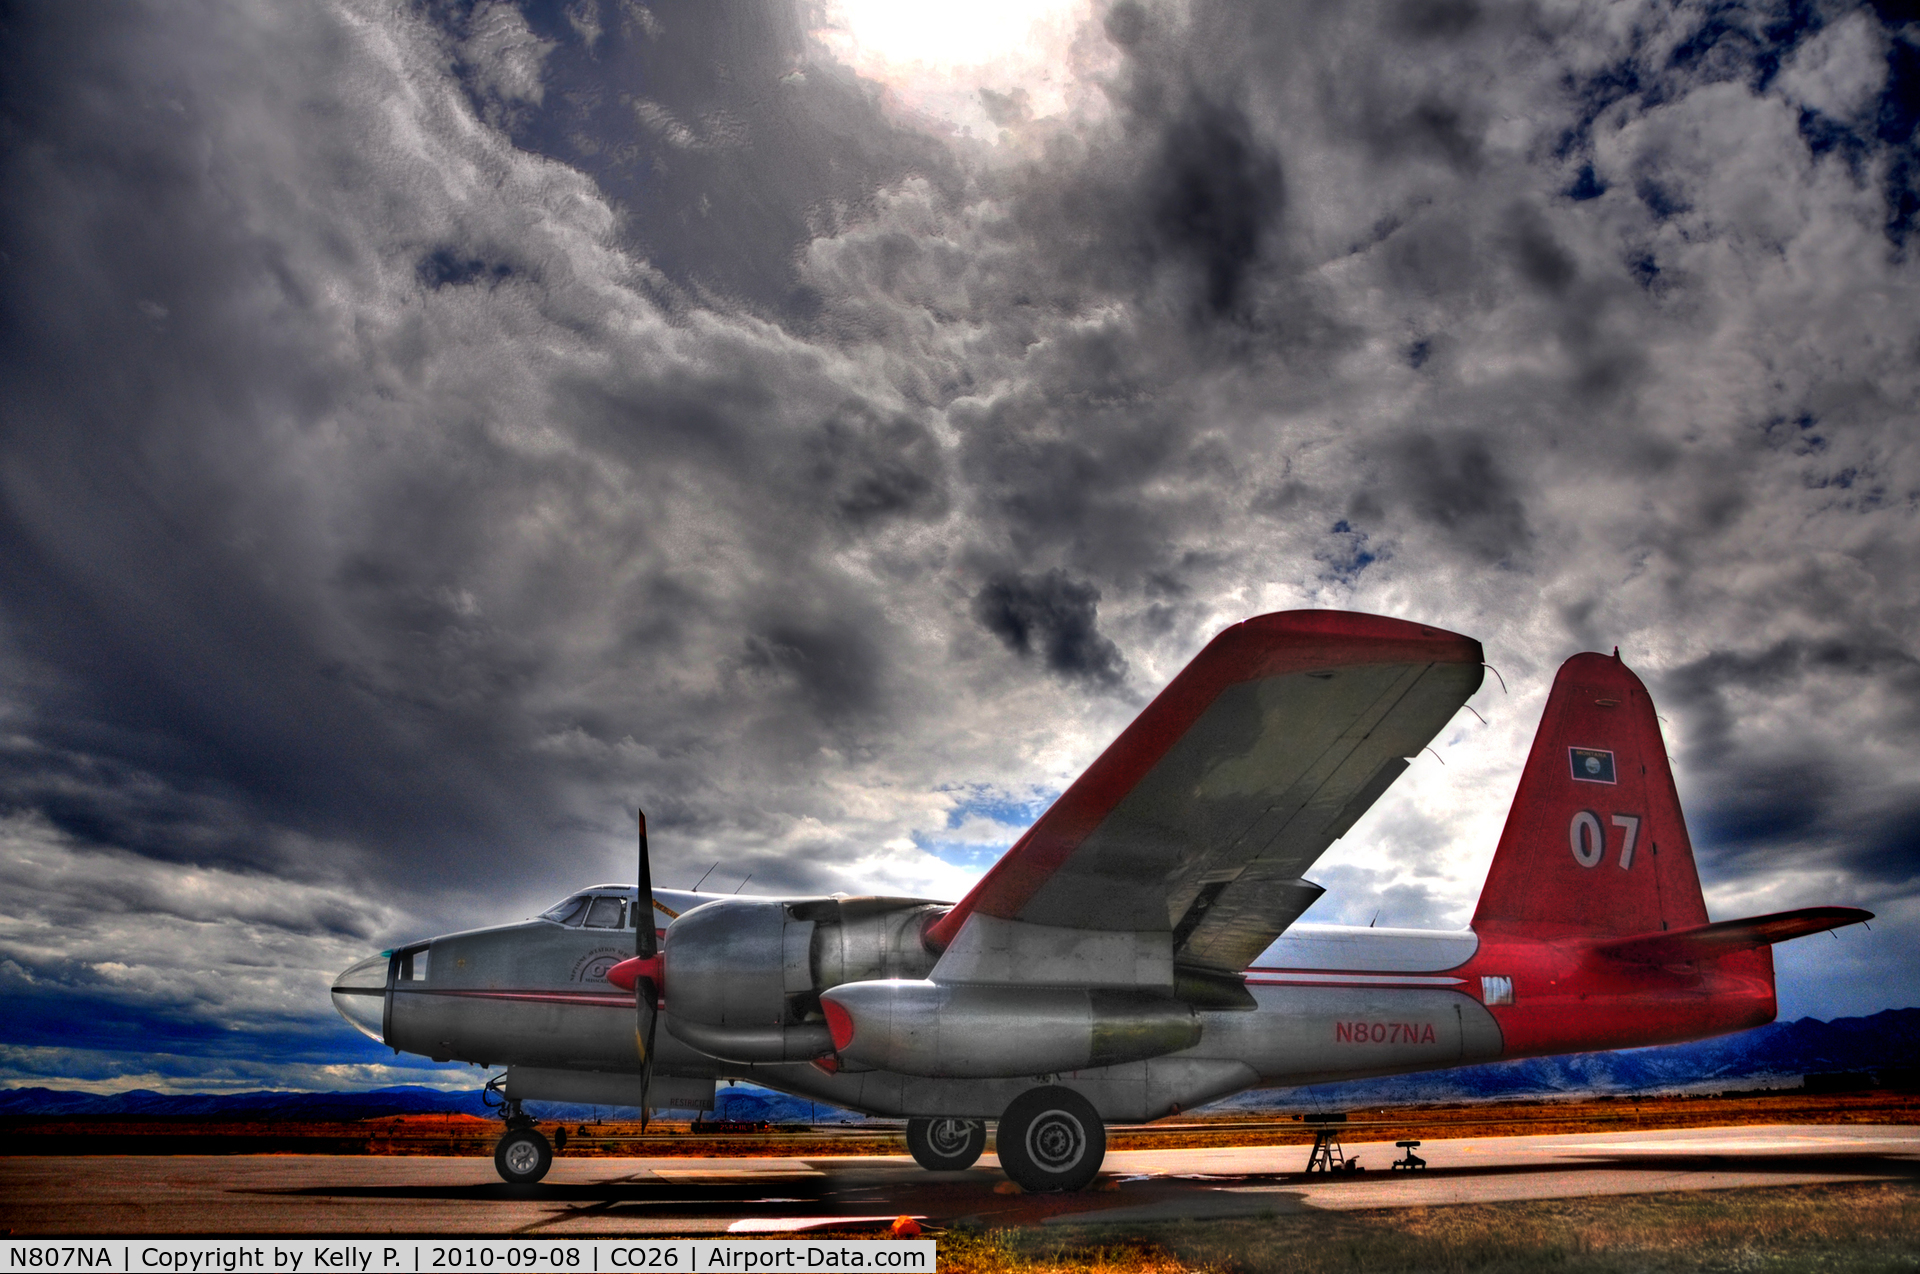 N807NA, 1954 Lockheed P2V-5F Neptune C/N 426-5305, 07 at Metropolitan Airport in Broomfield Colorado during Fourmile Fire. Sept, 8 2010